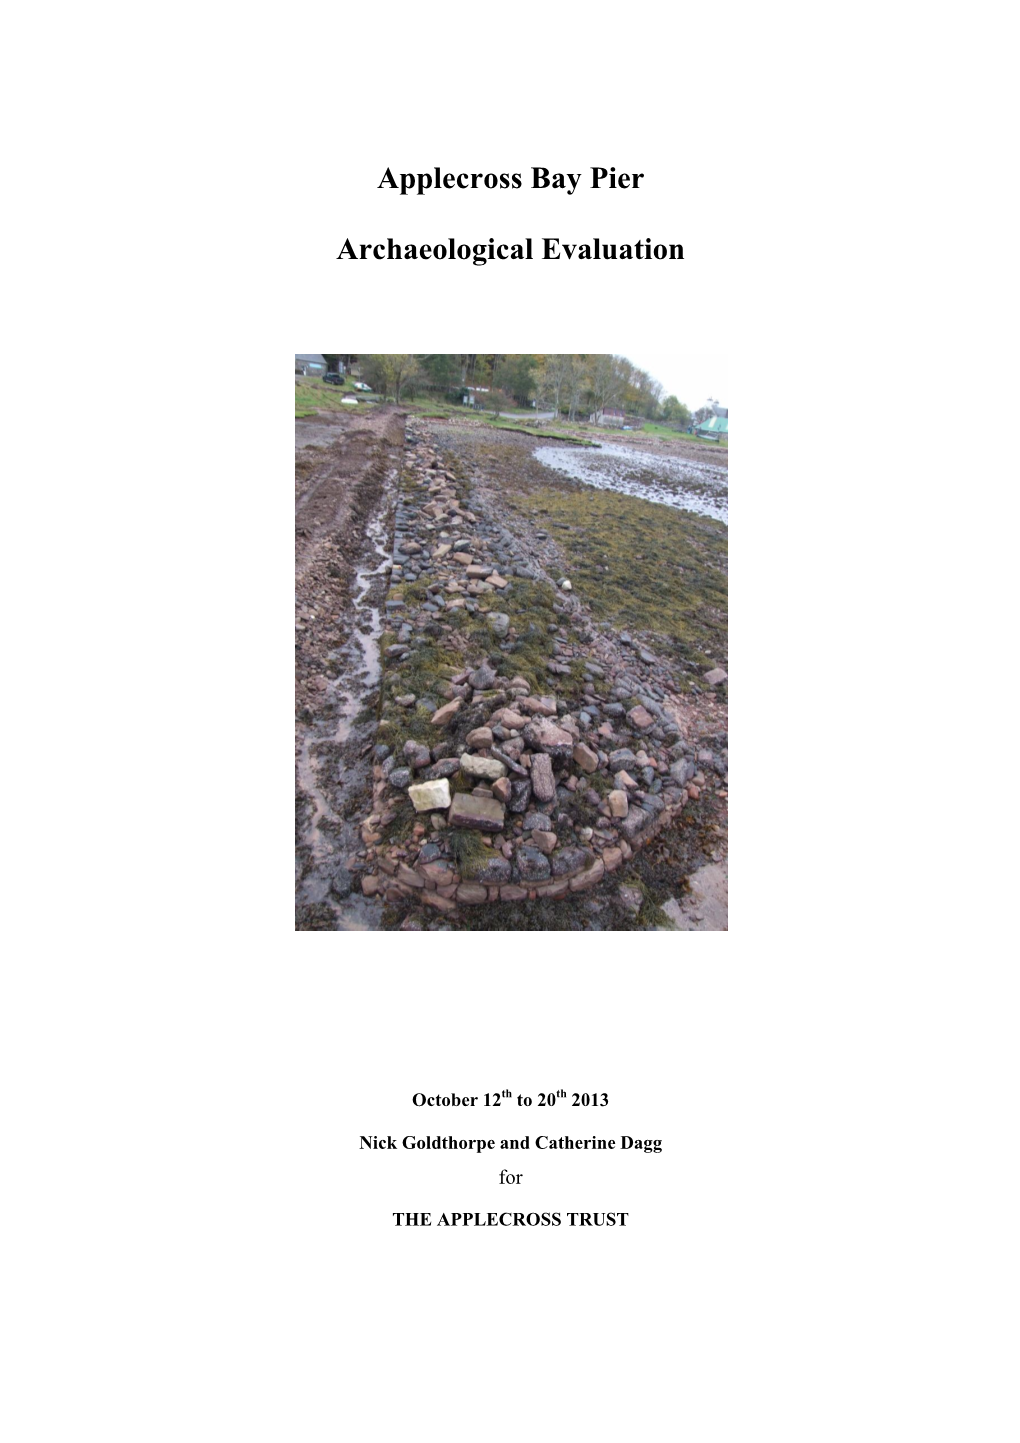 Applecross Bay Pier Archaeological Evaluation